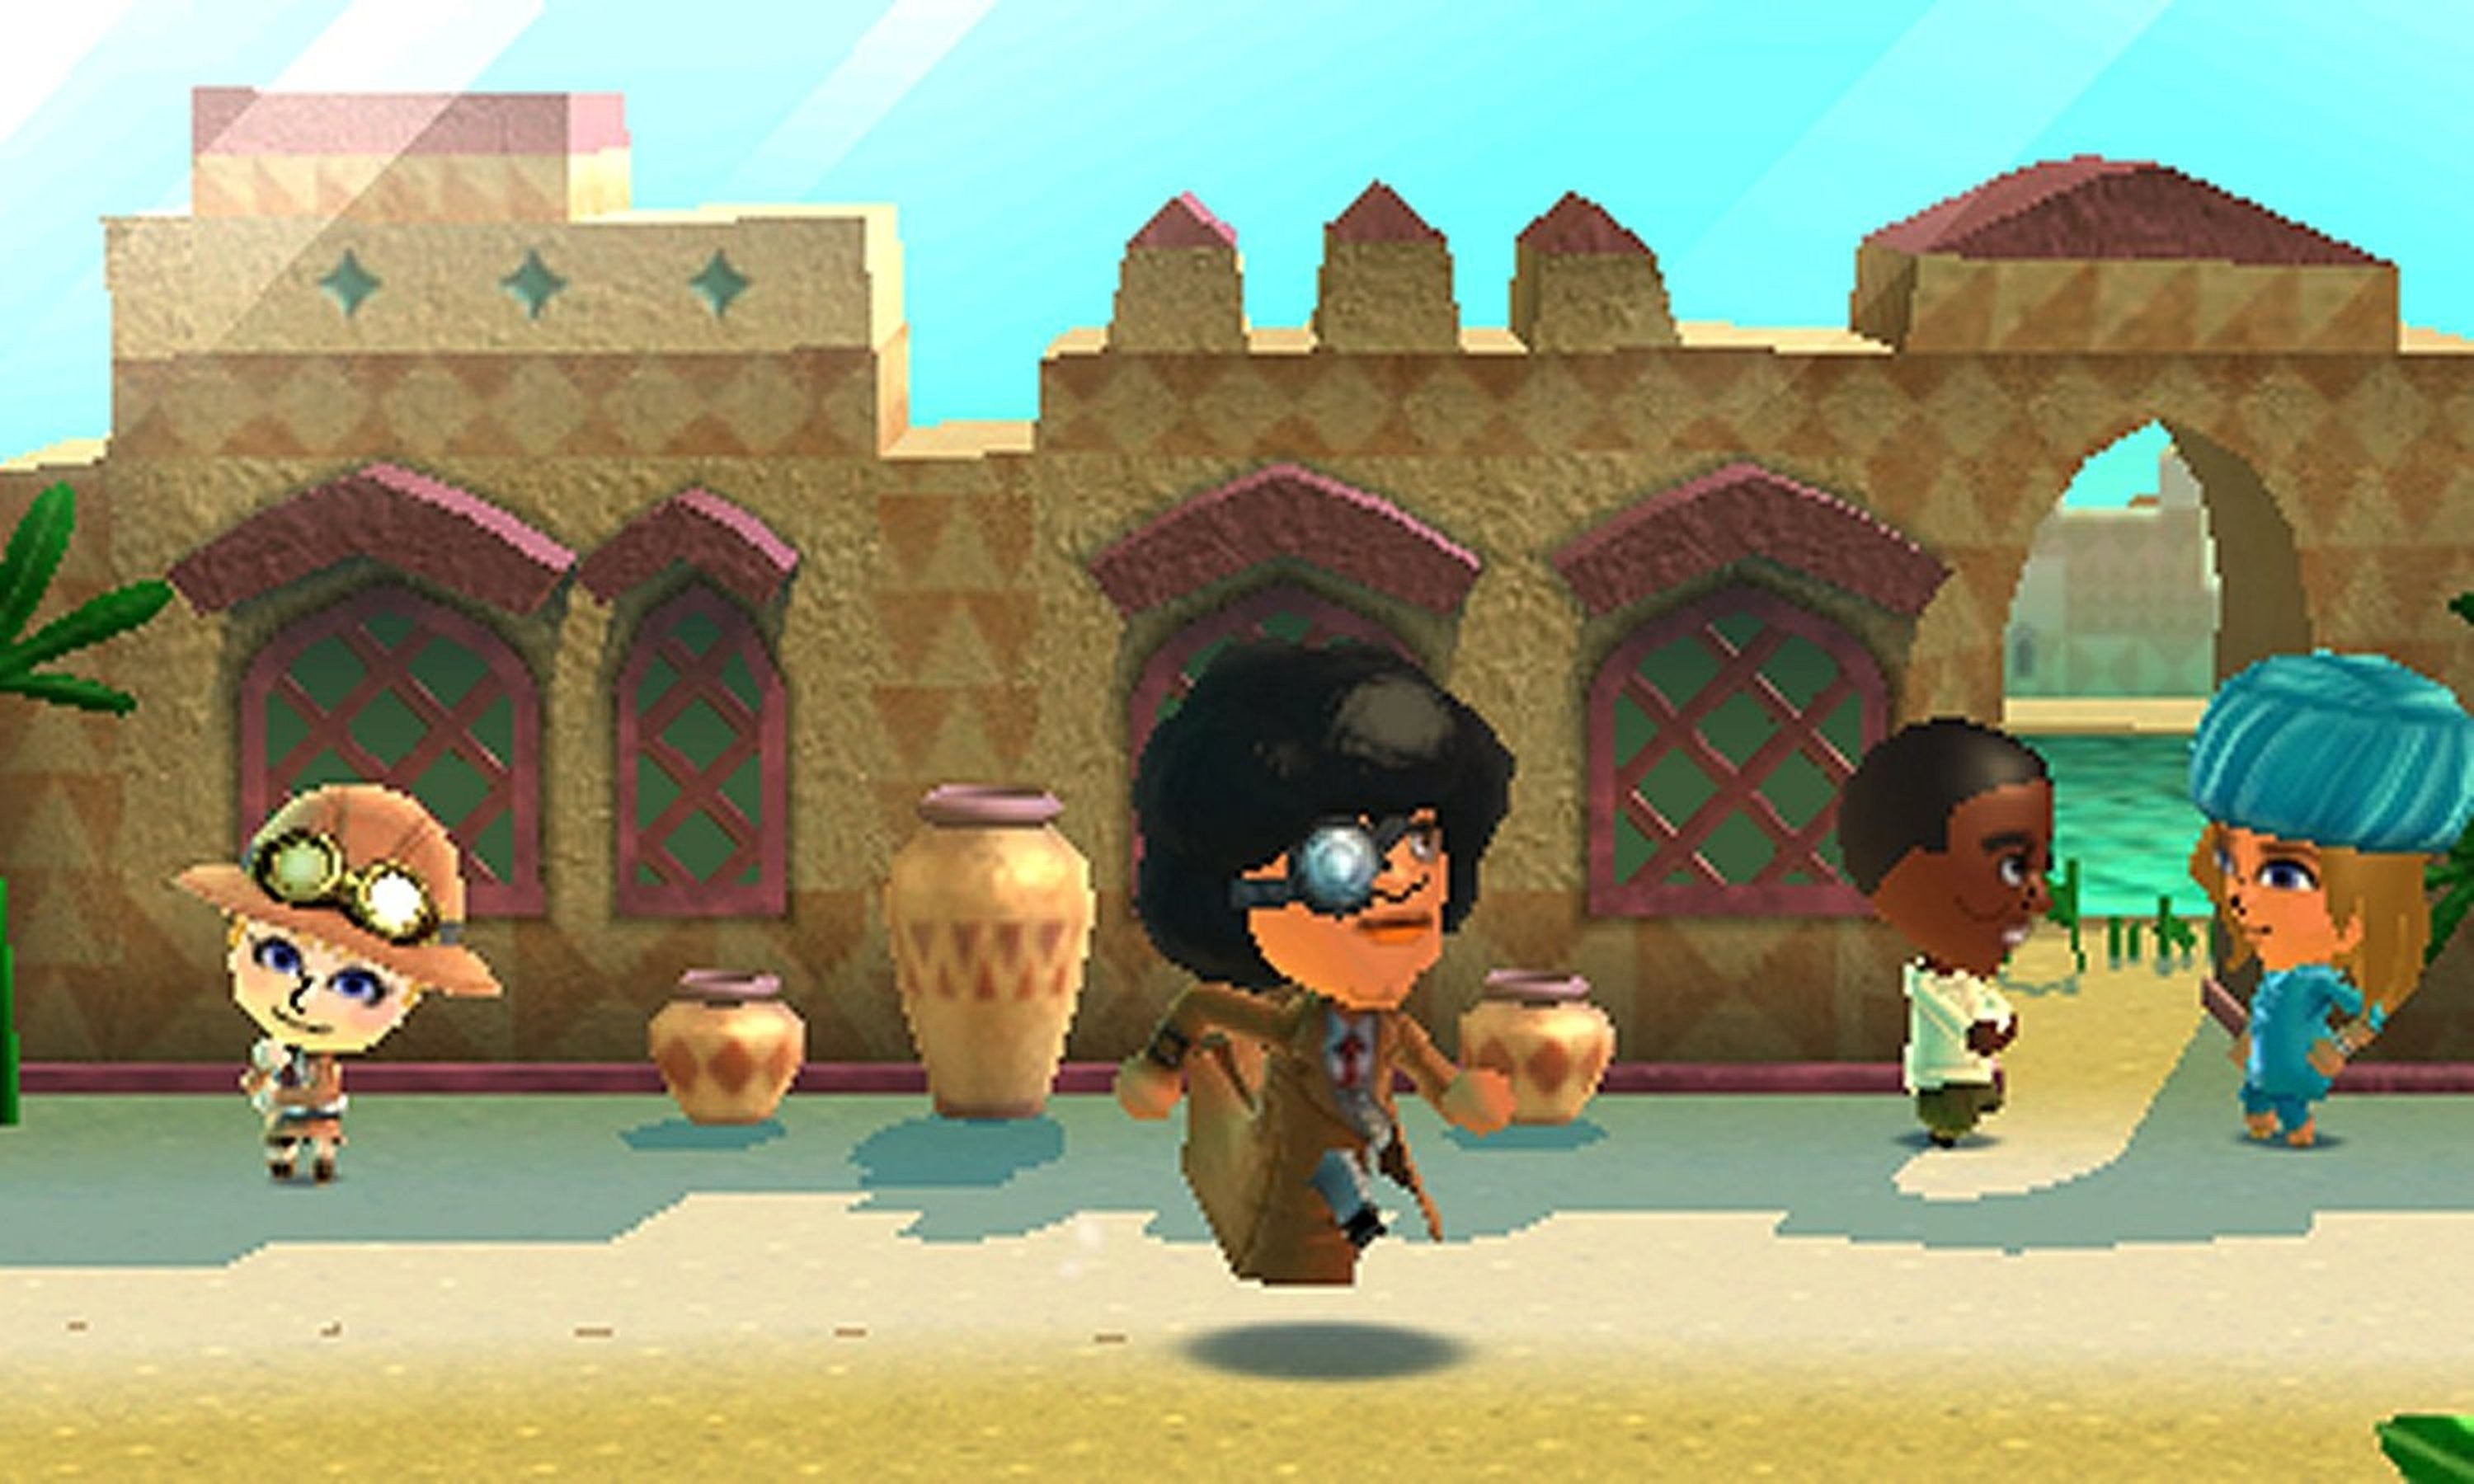 Miitopia game screenshot showing characters in desert town.